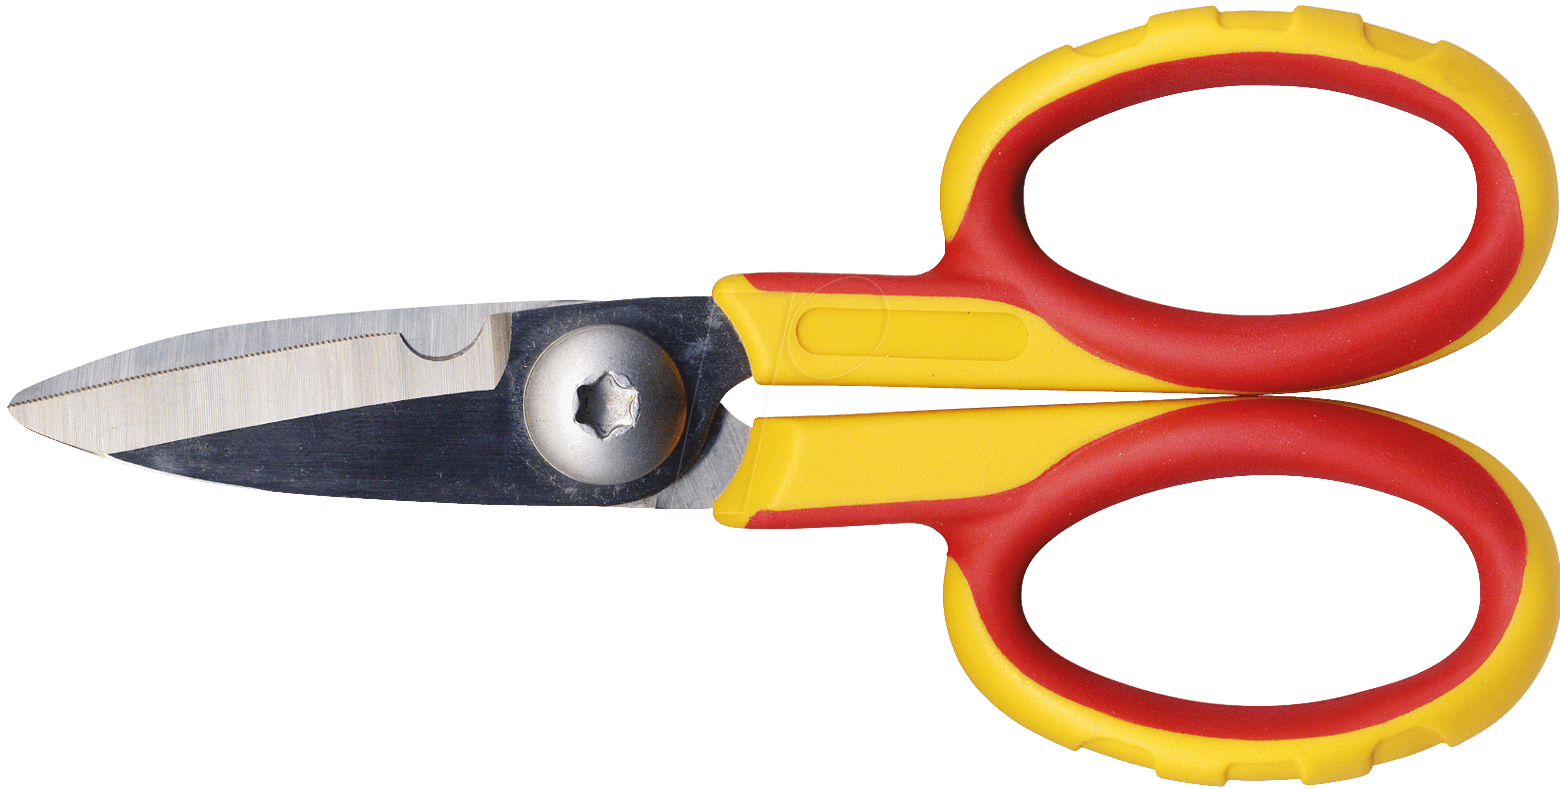 Electrician's Scissors With Belt Pouch C - Electrician Scissors (1560x789)